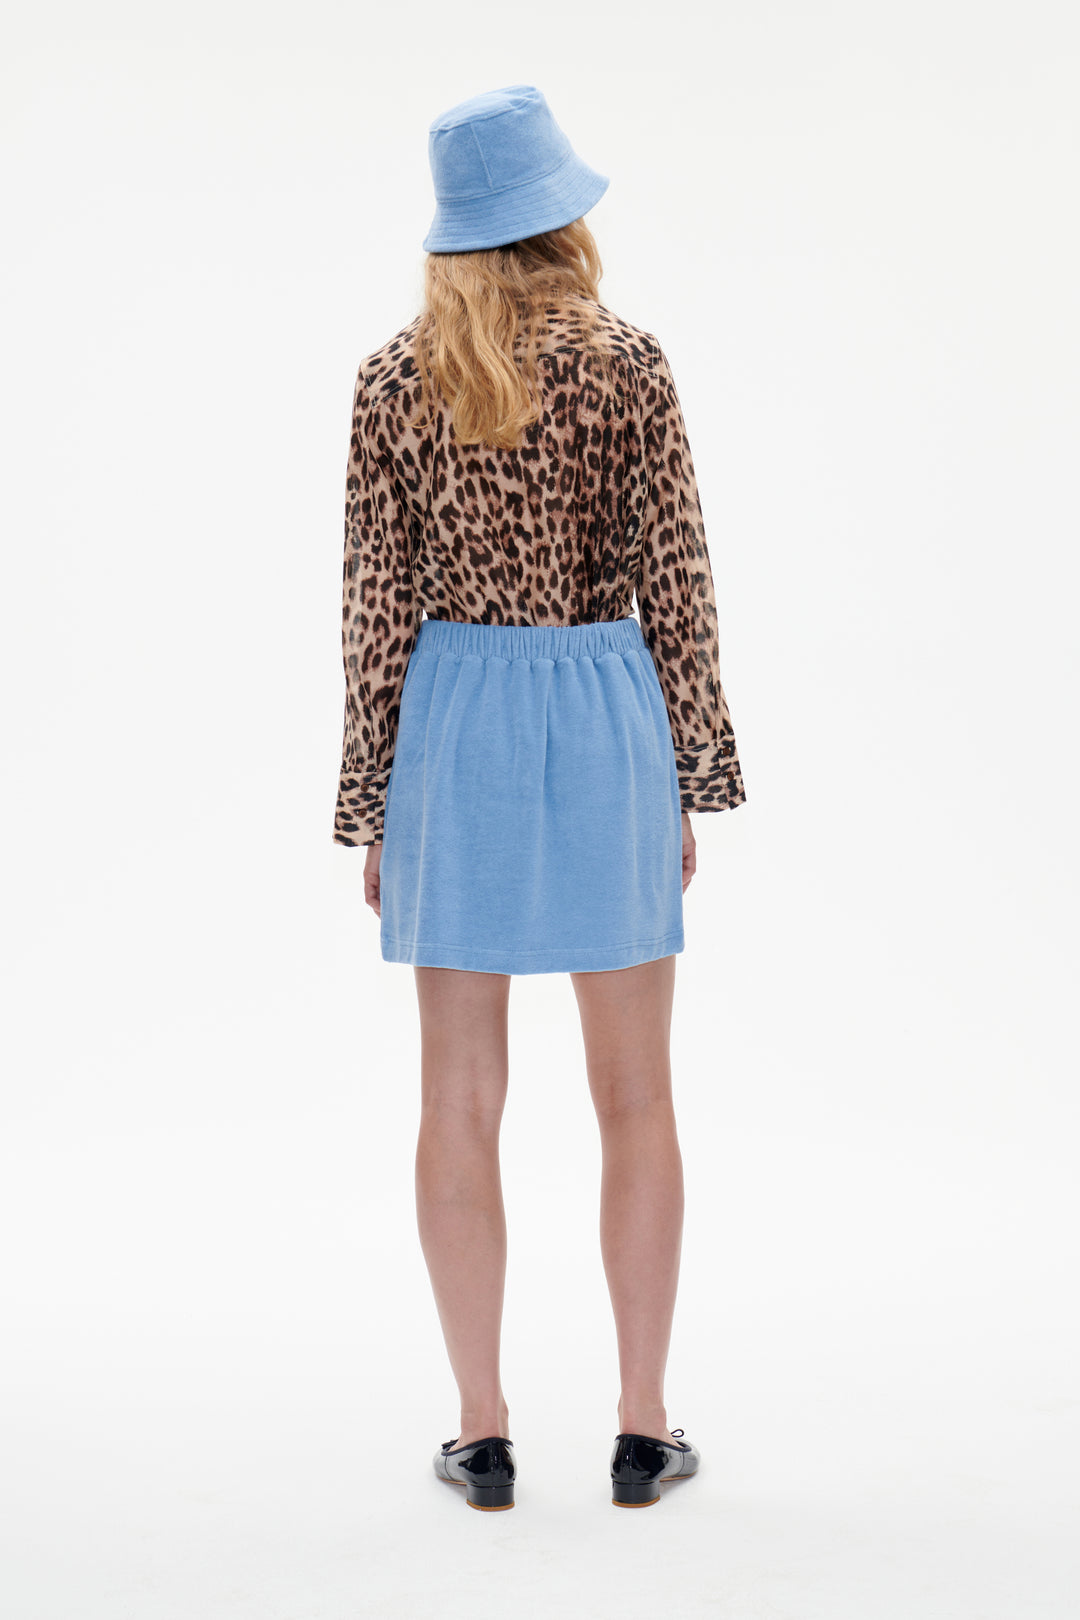 Madison Shirt - Brown Baum Leopard